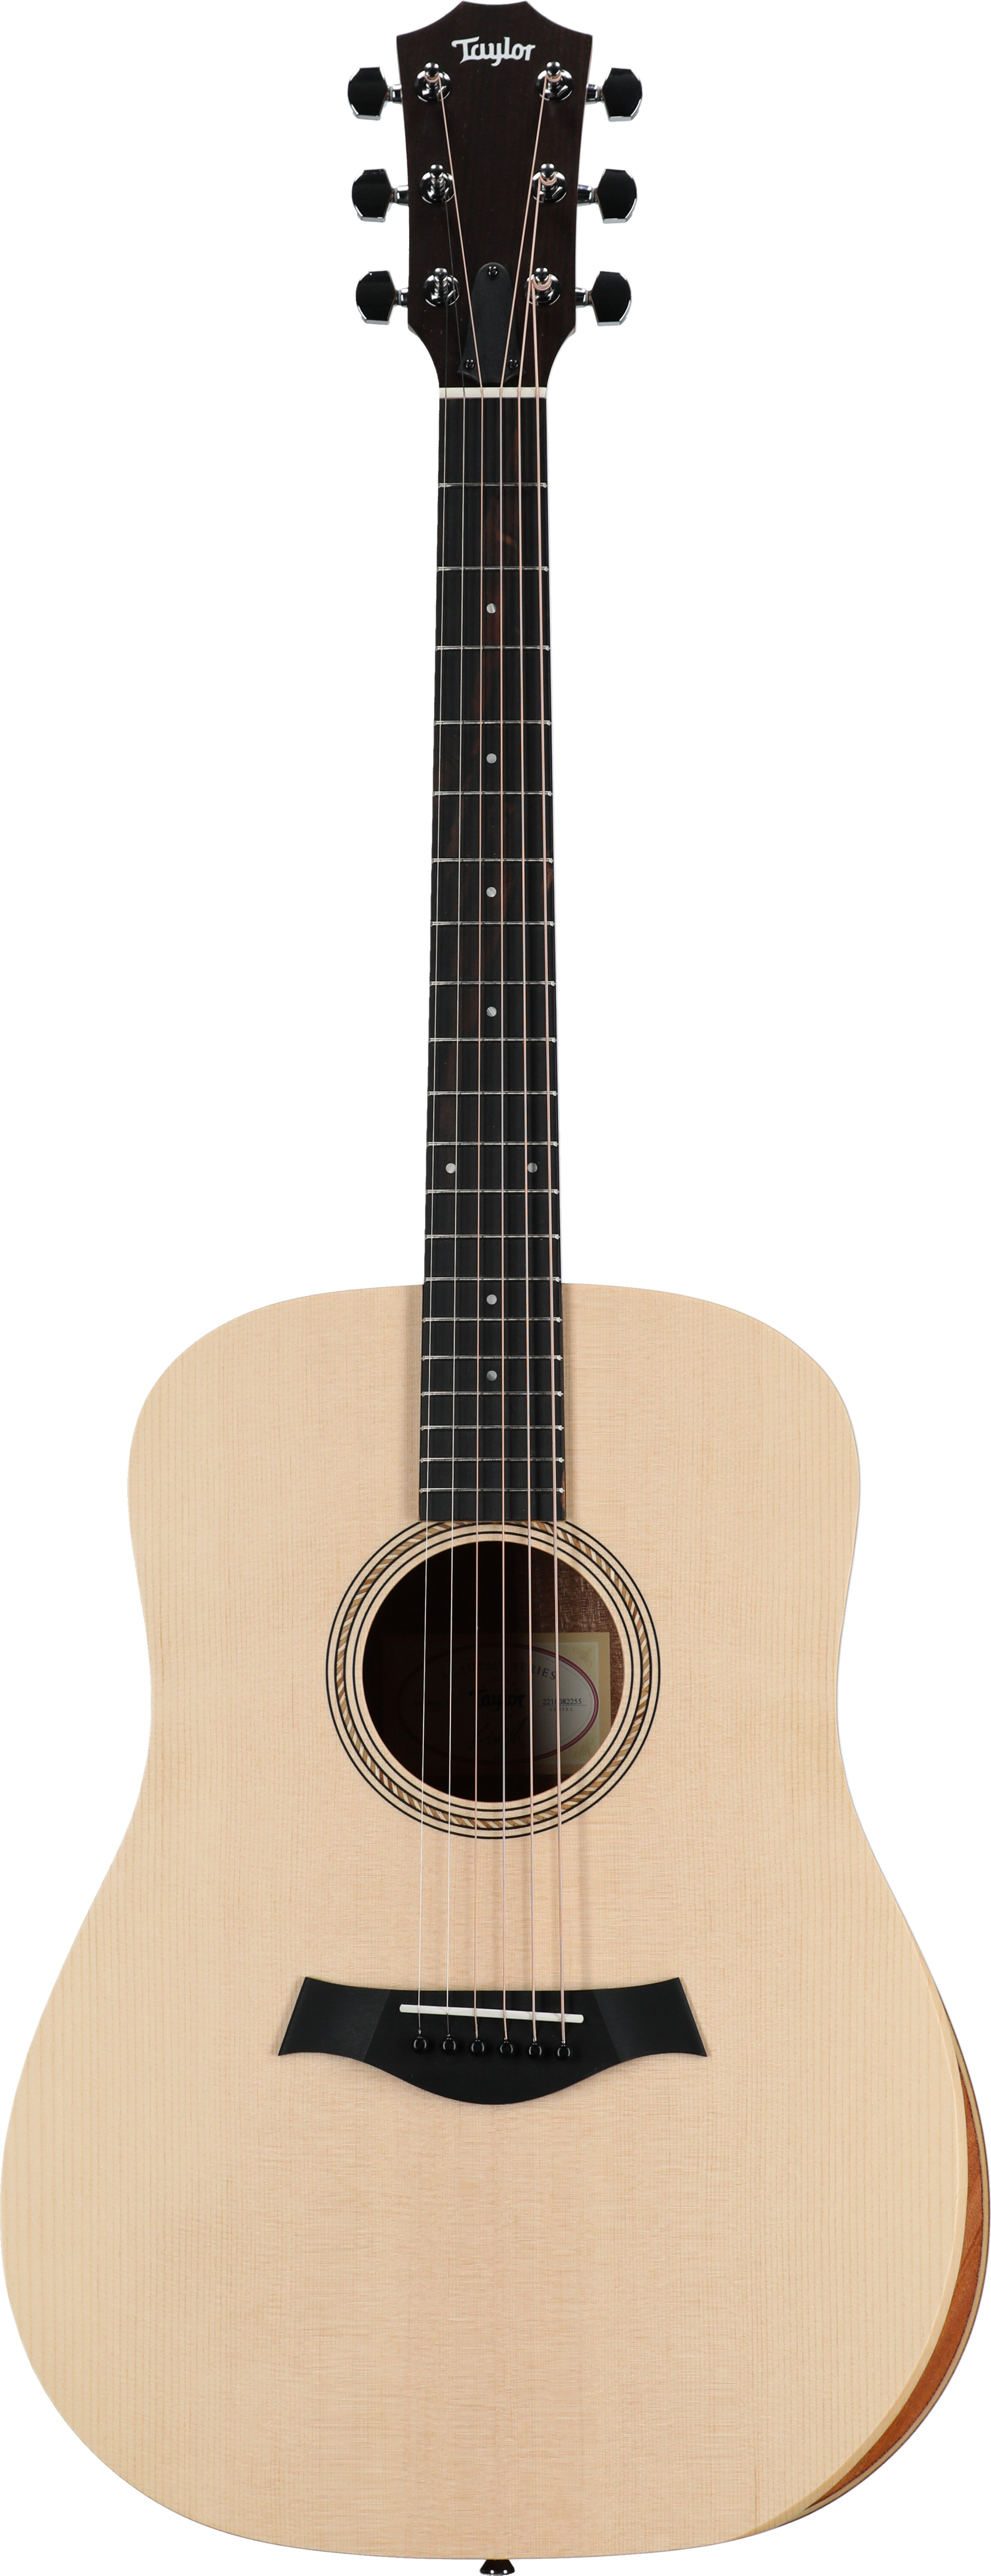 Taylor Academy 10 Left-Handed Acoustic Guitar -  Taylor Guitars, Academy10-LH-22